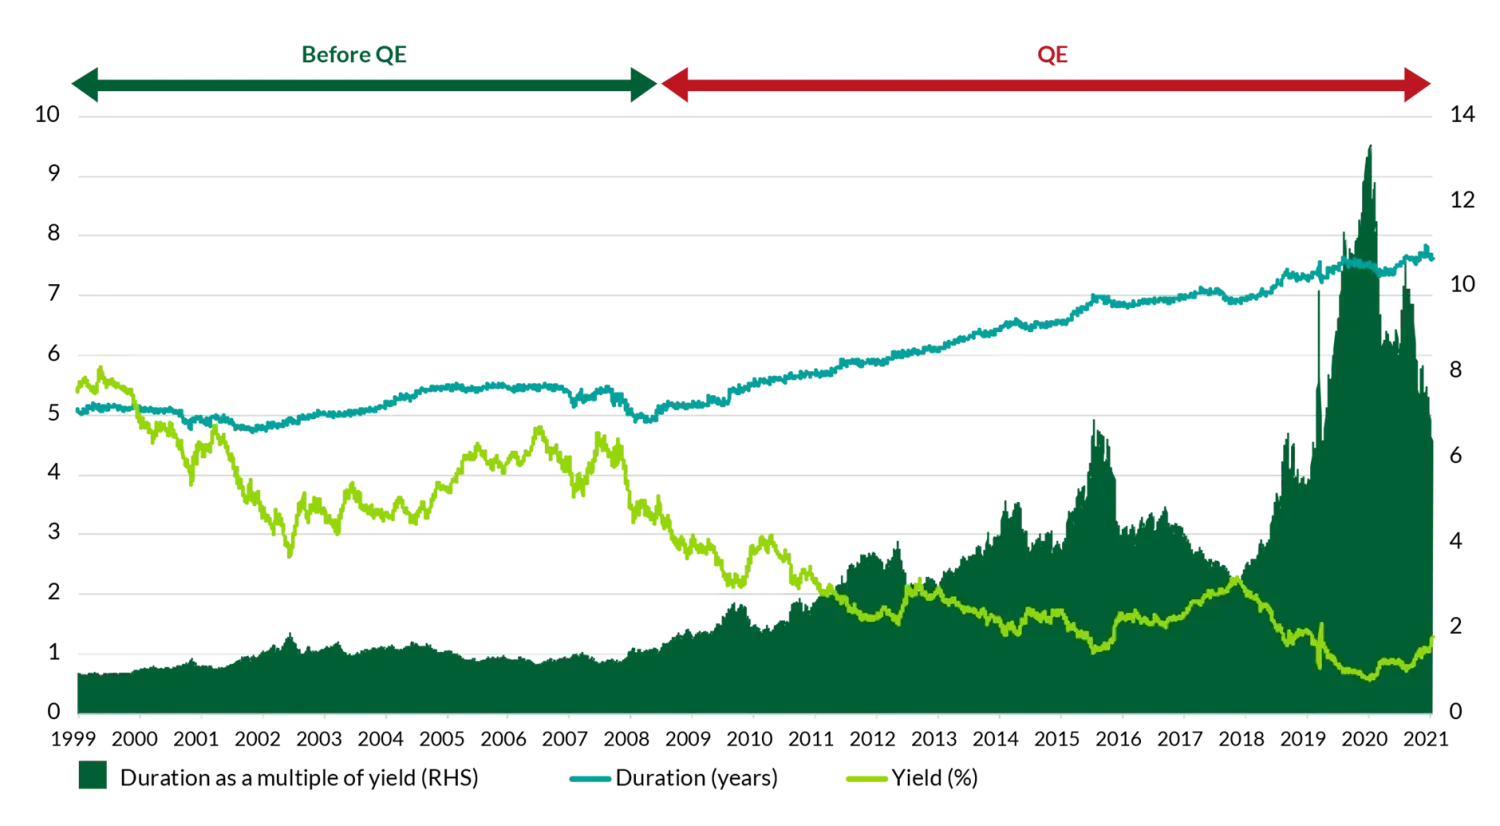 Chart 1: Bond market duration vs. yield, 1999-present